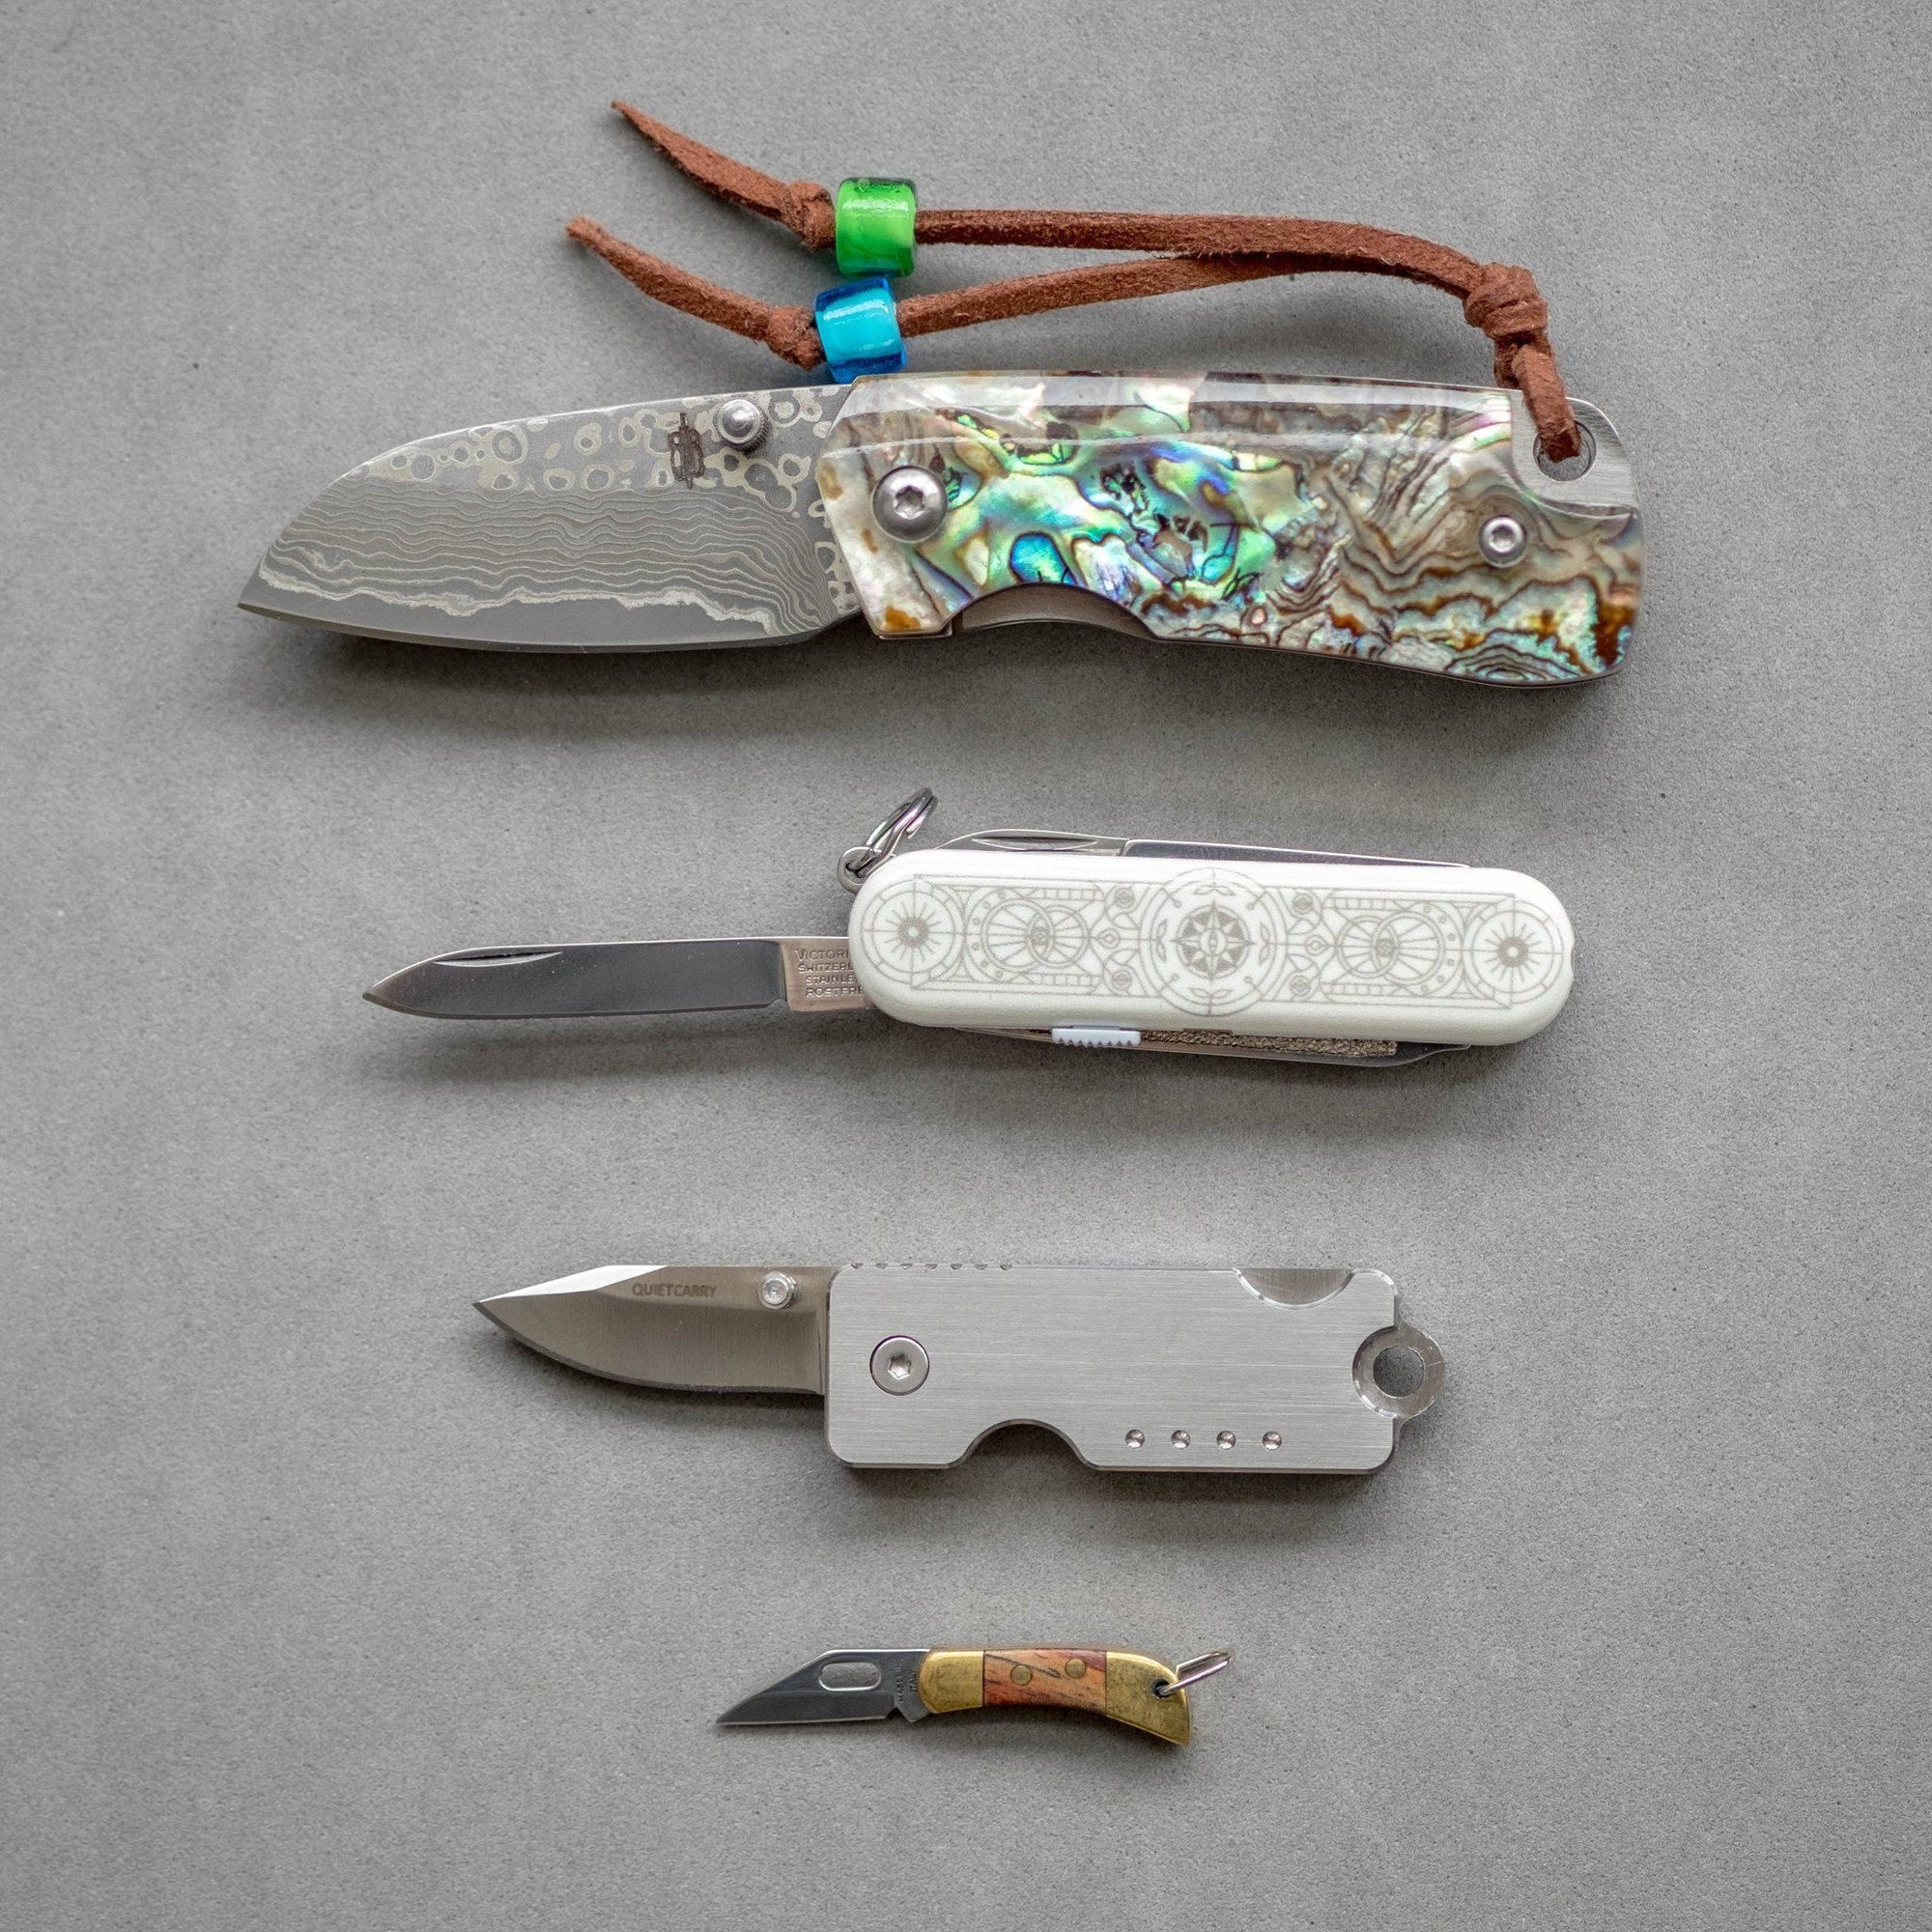 How To Create A Custom Swiss Army Knife